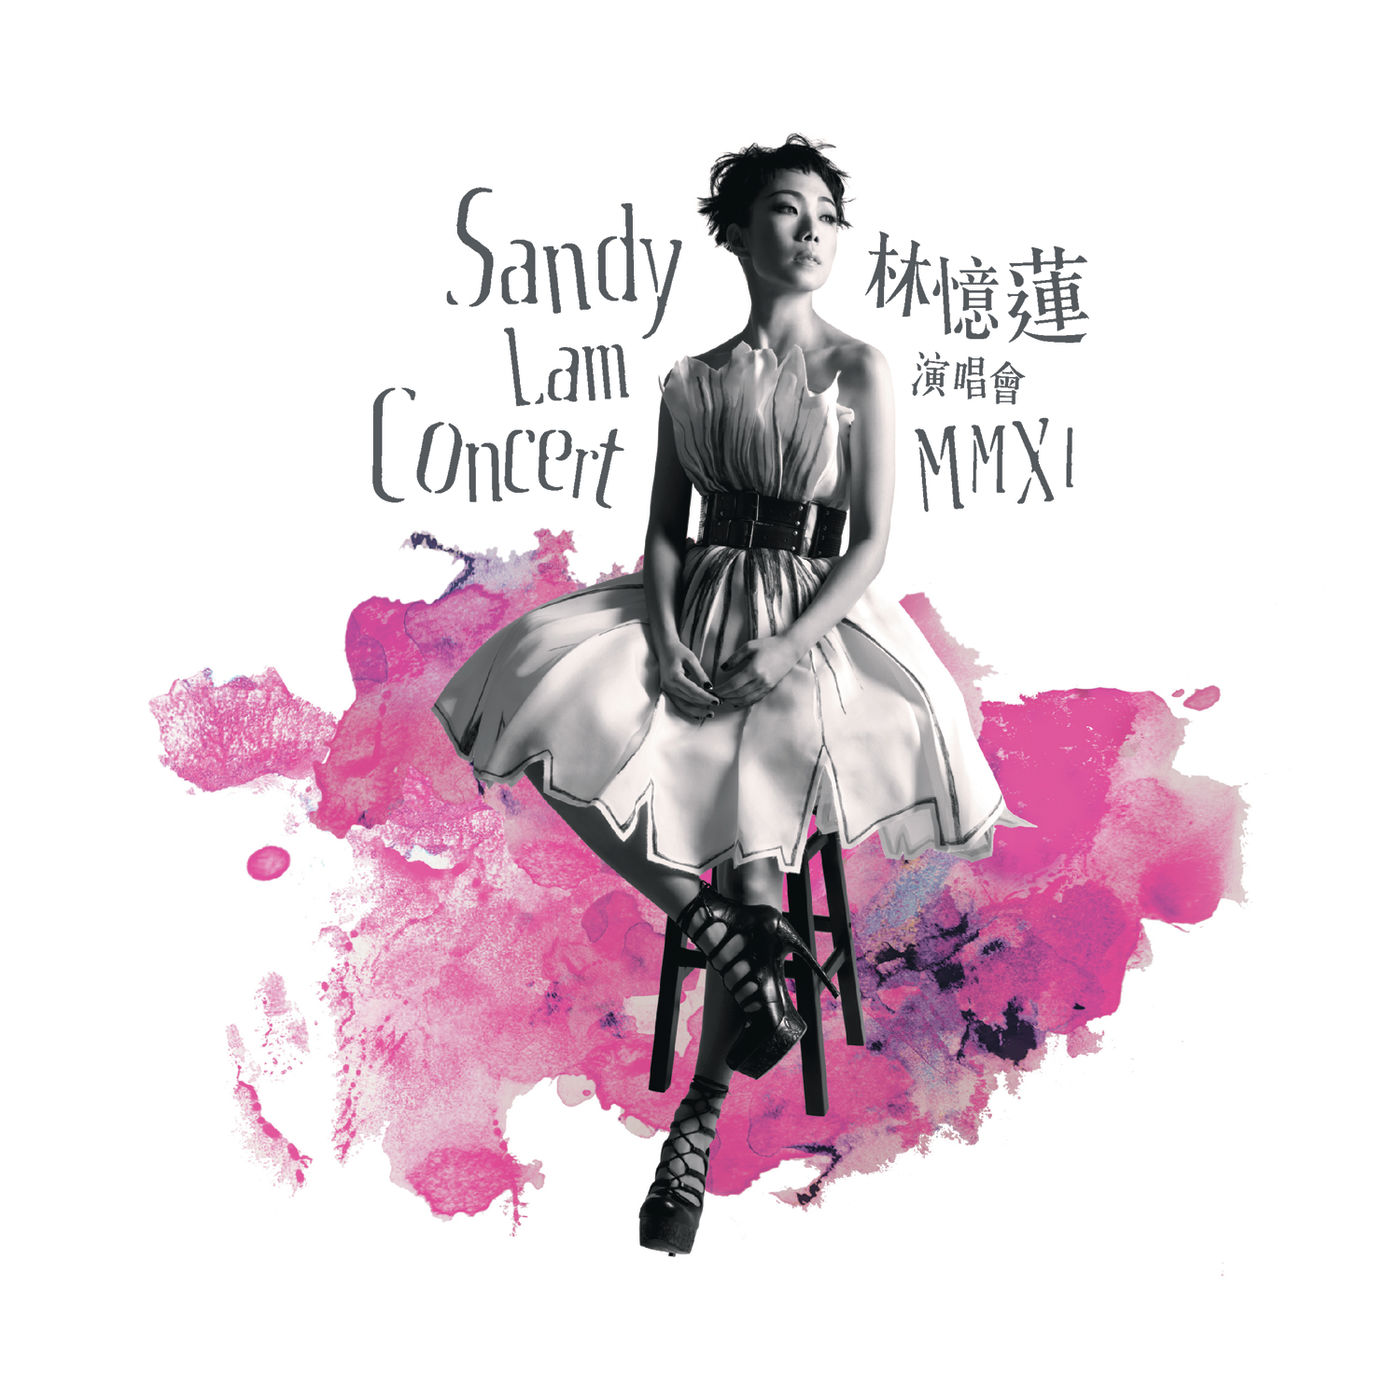 Sandy Lam Concert Mmxi演唱会